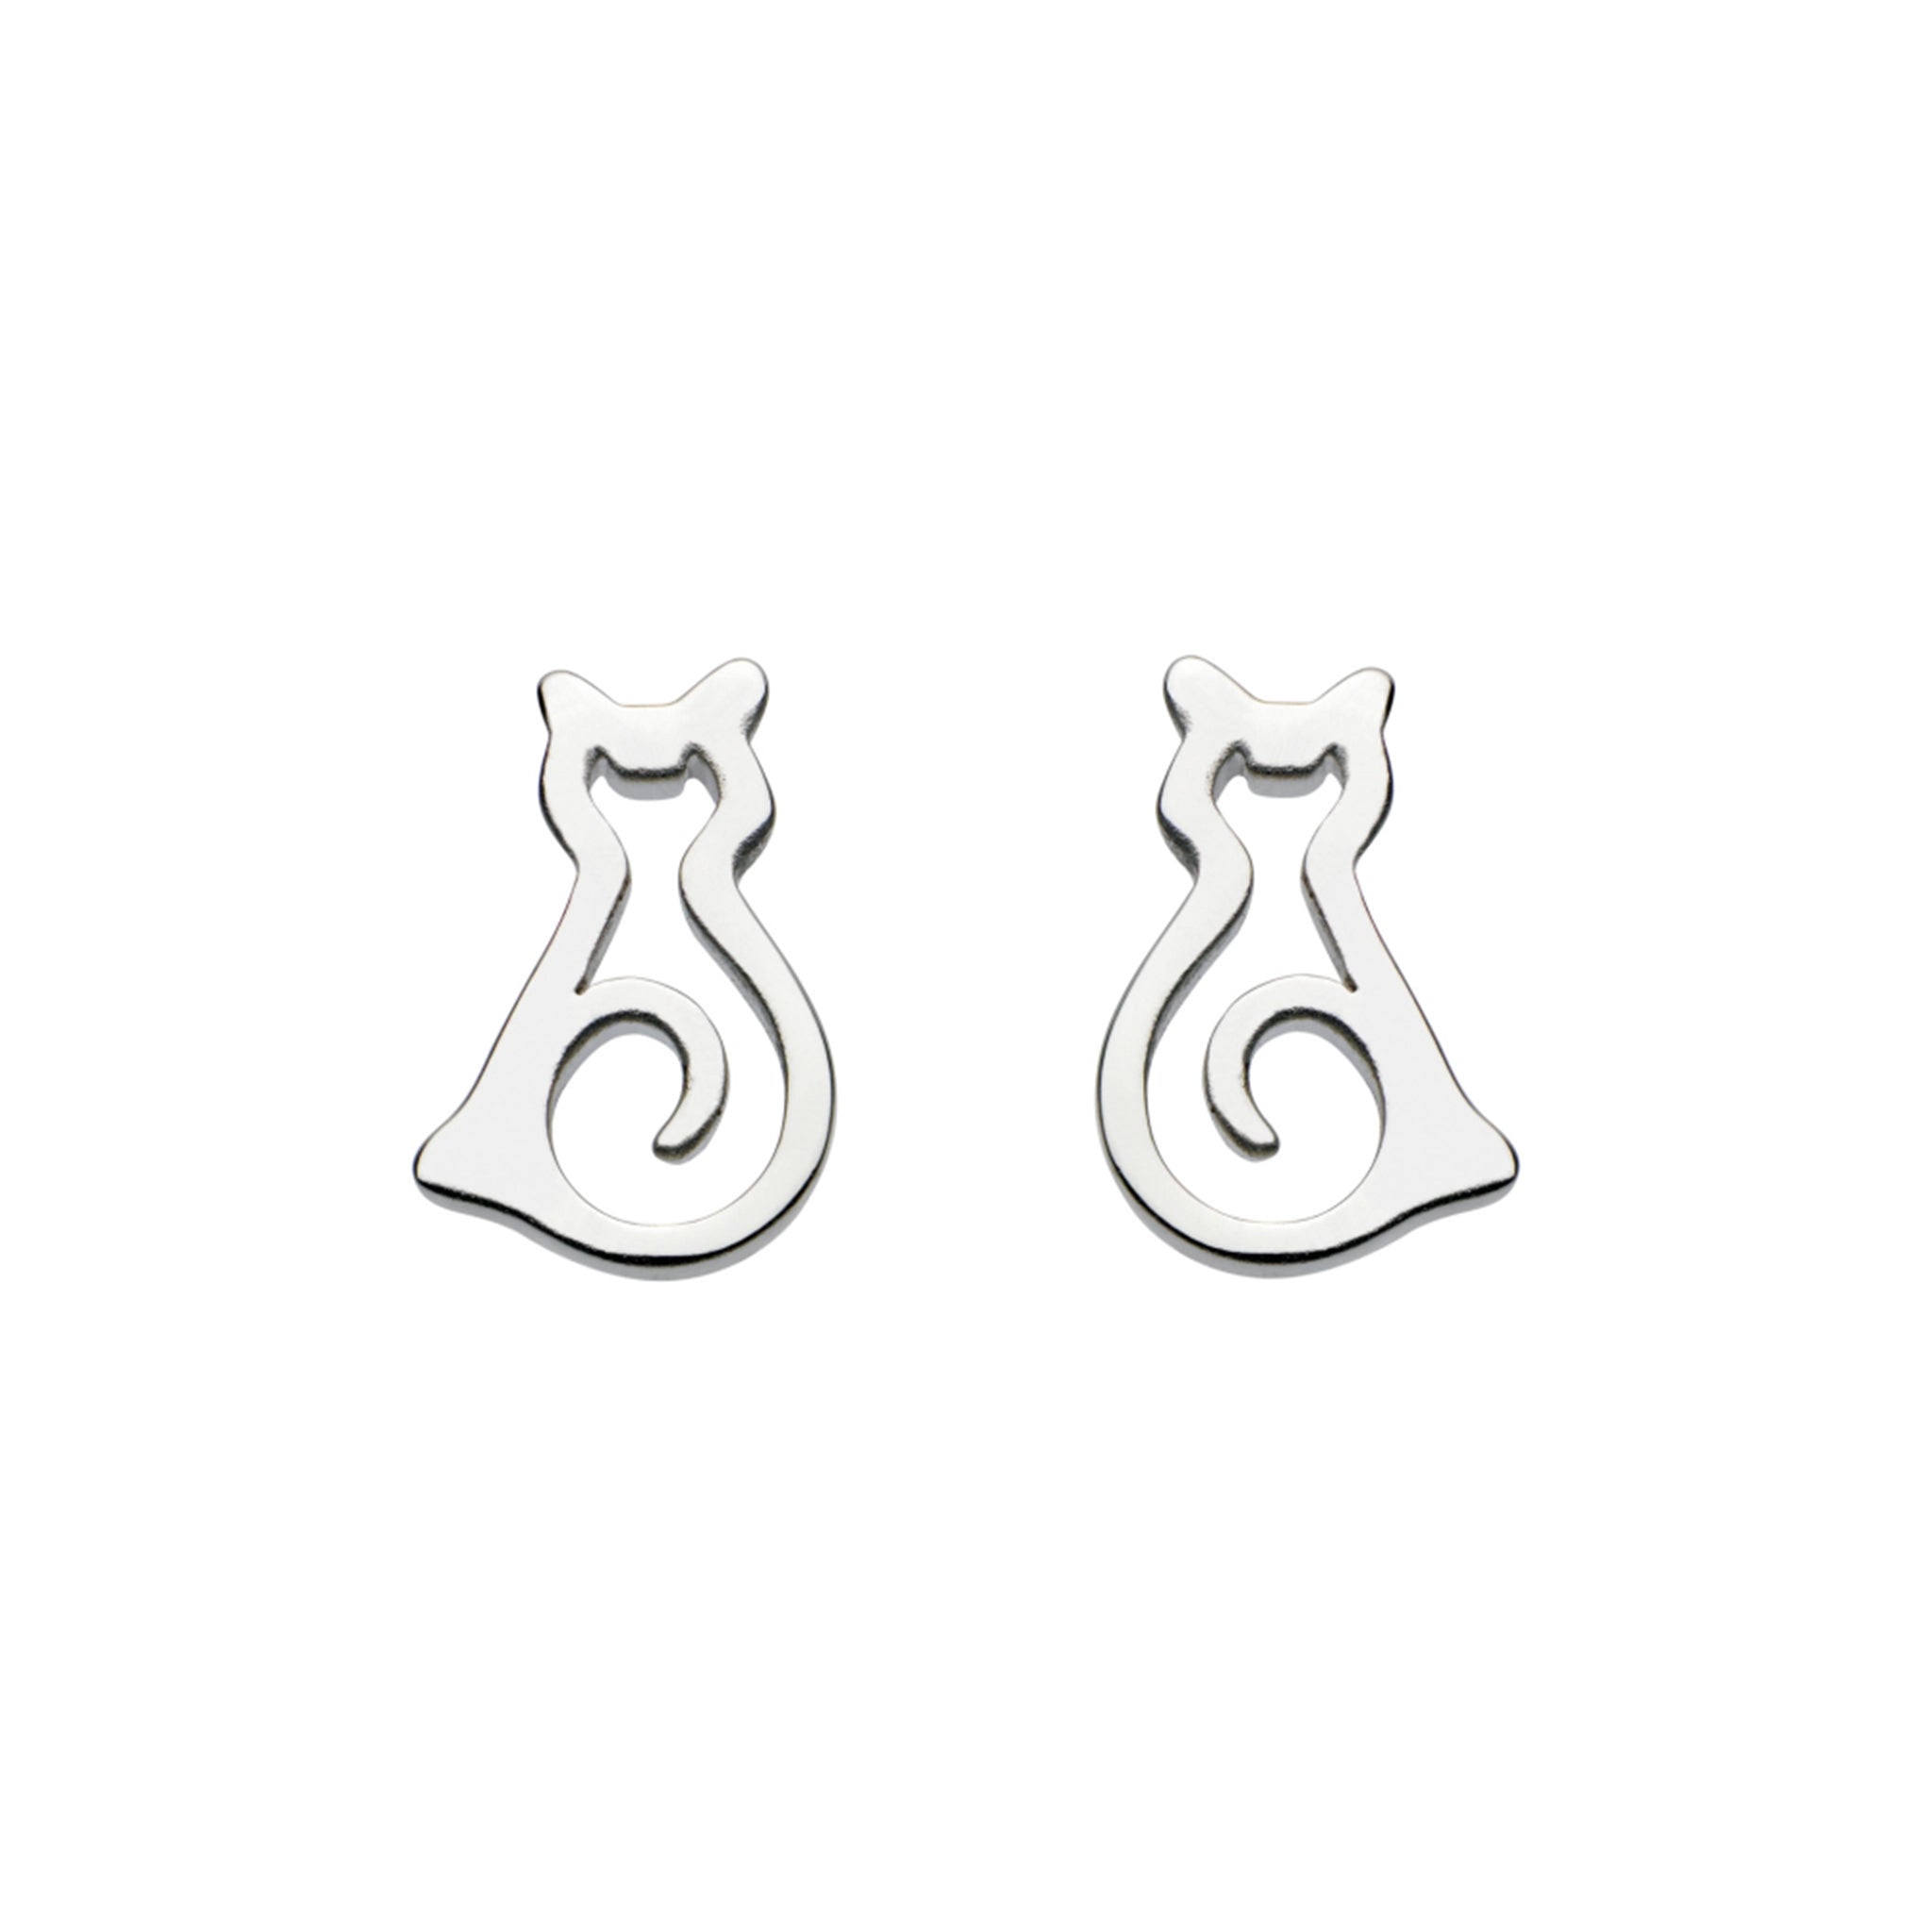 A pair of simple silver sitting cat stud earrings